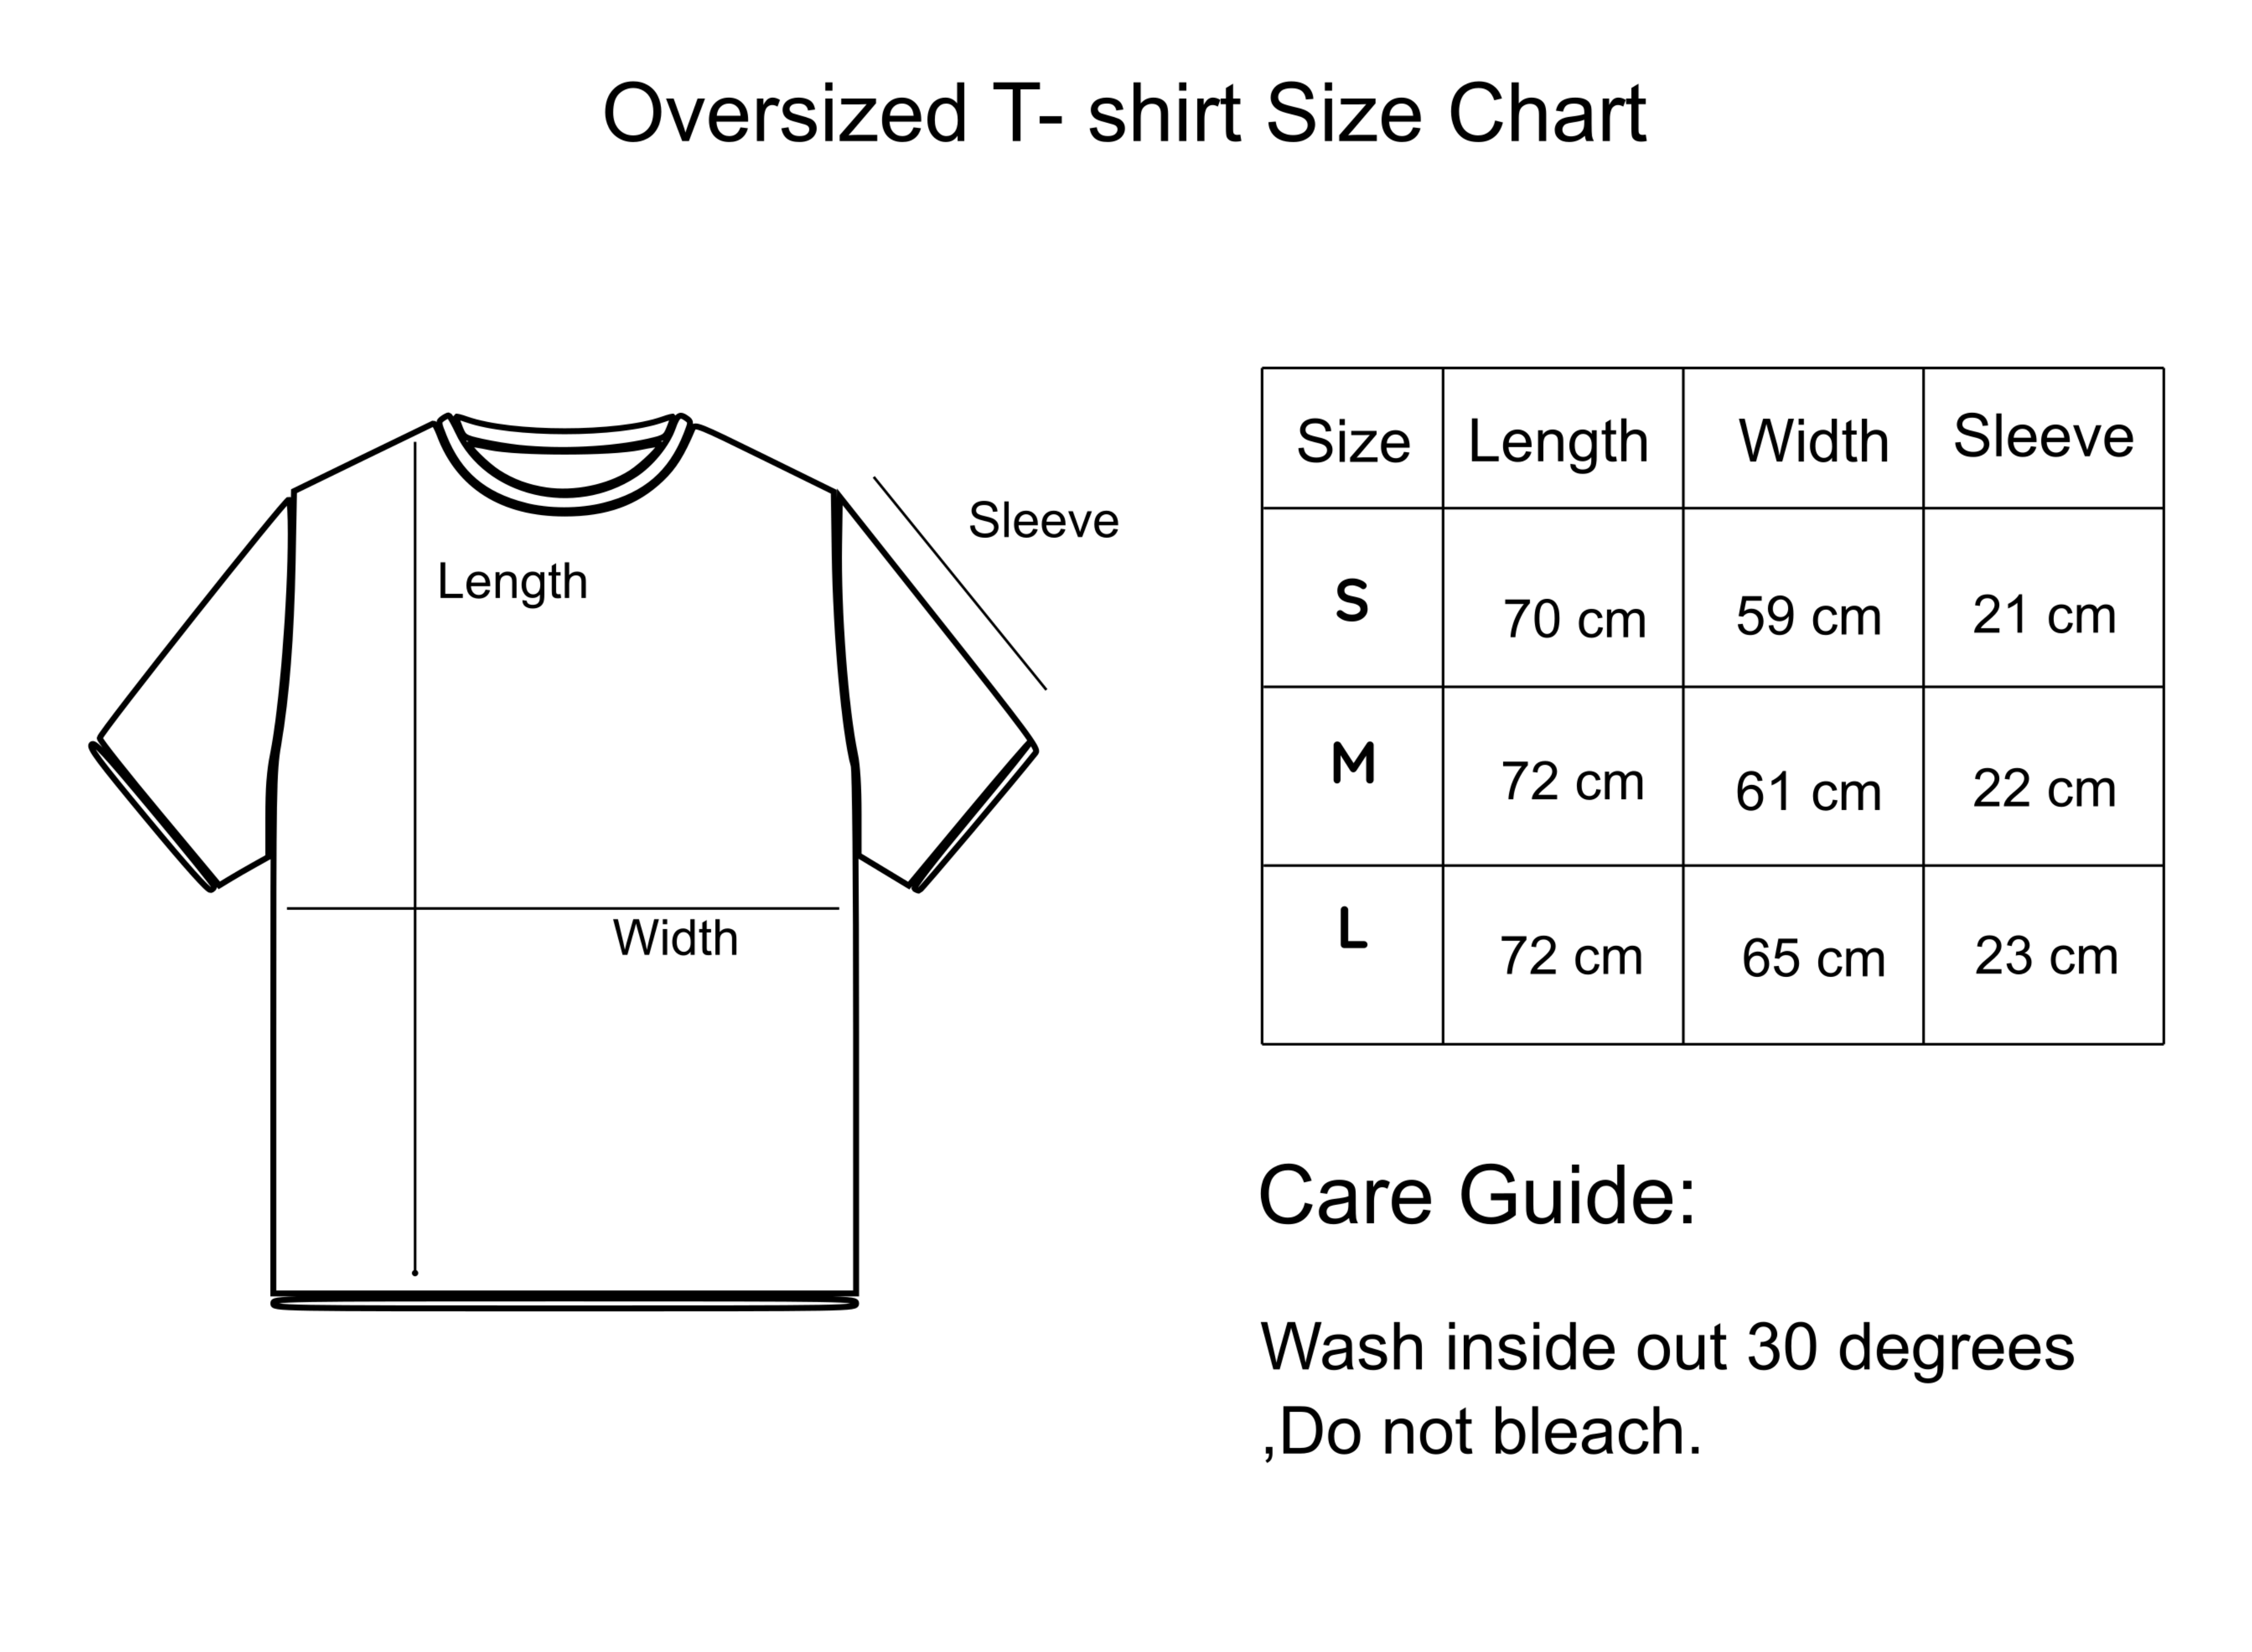 madd oversized t shirts size guide